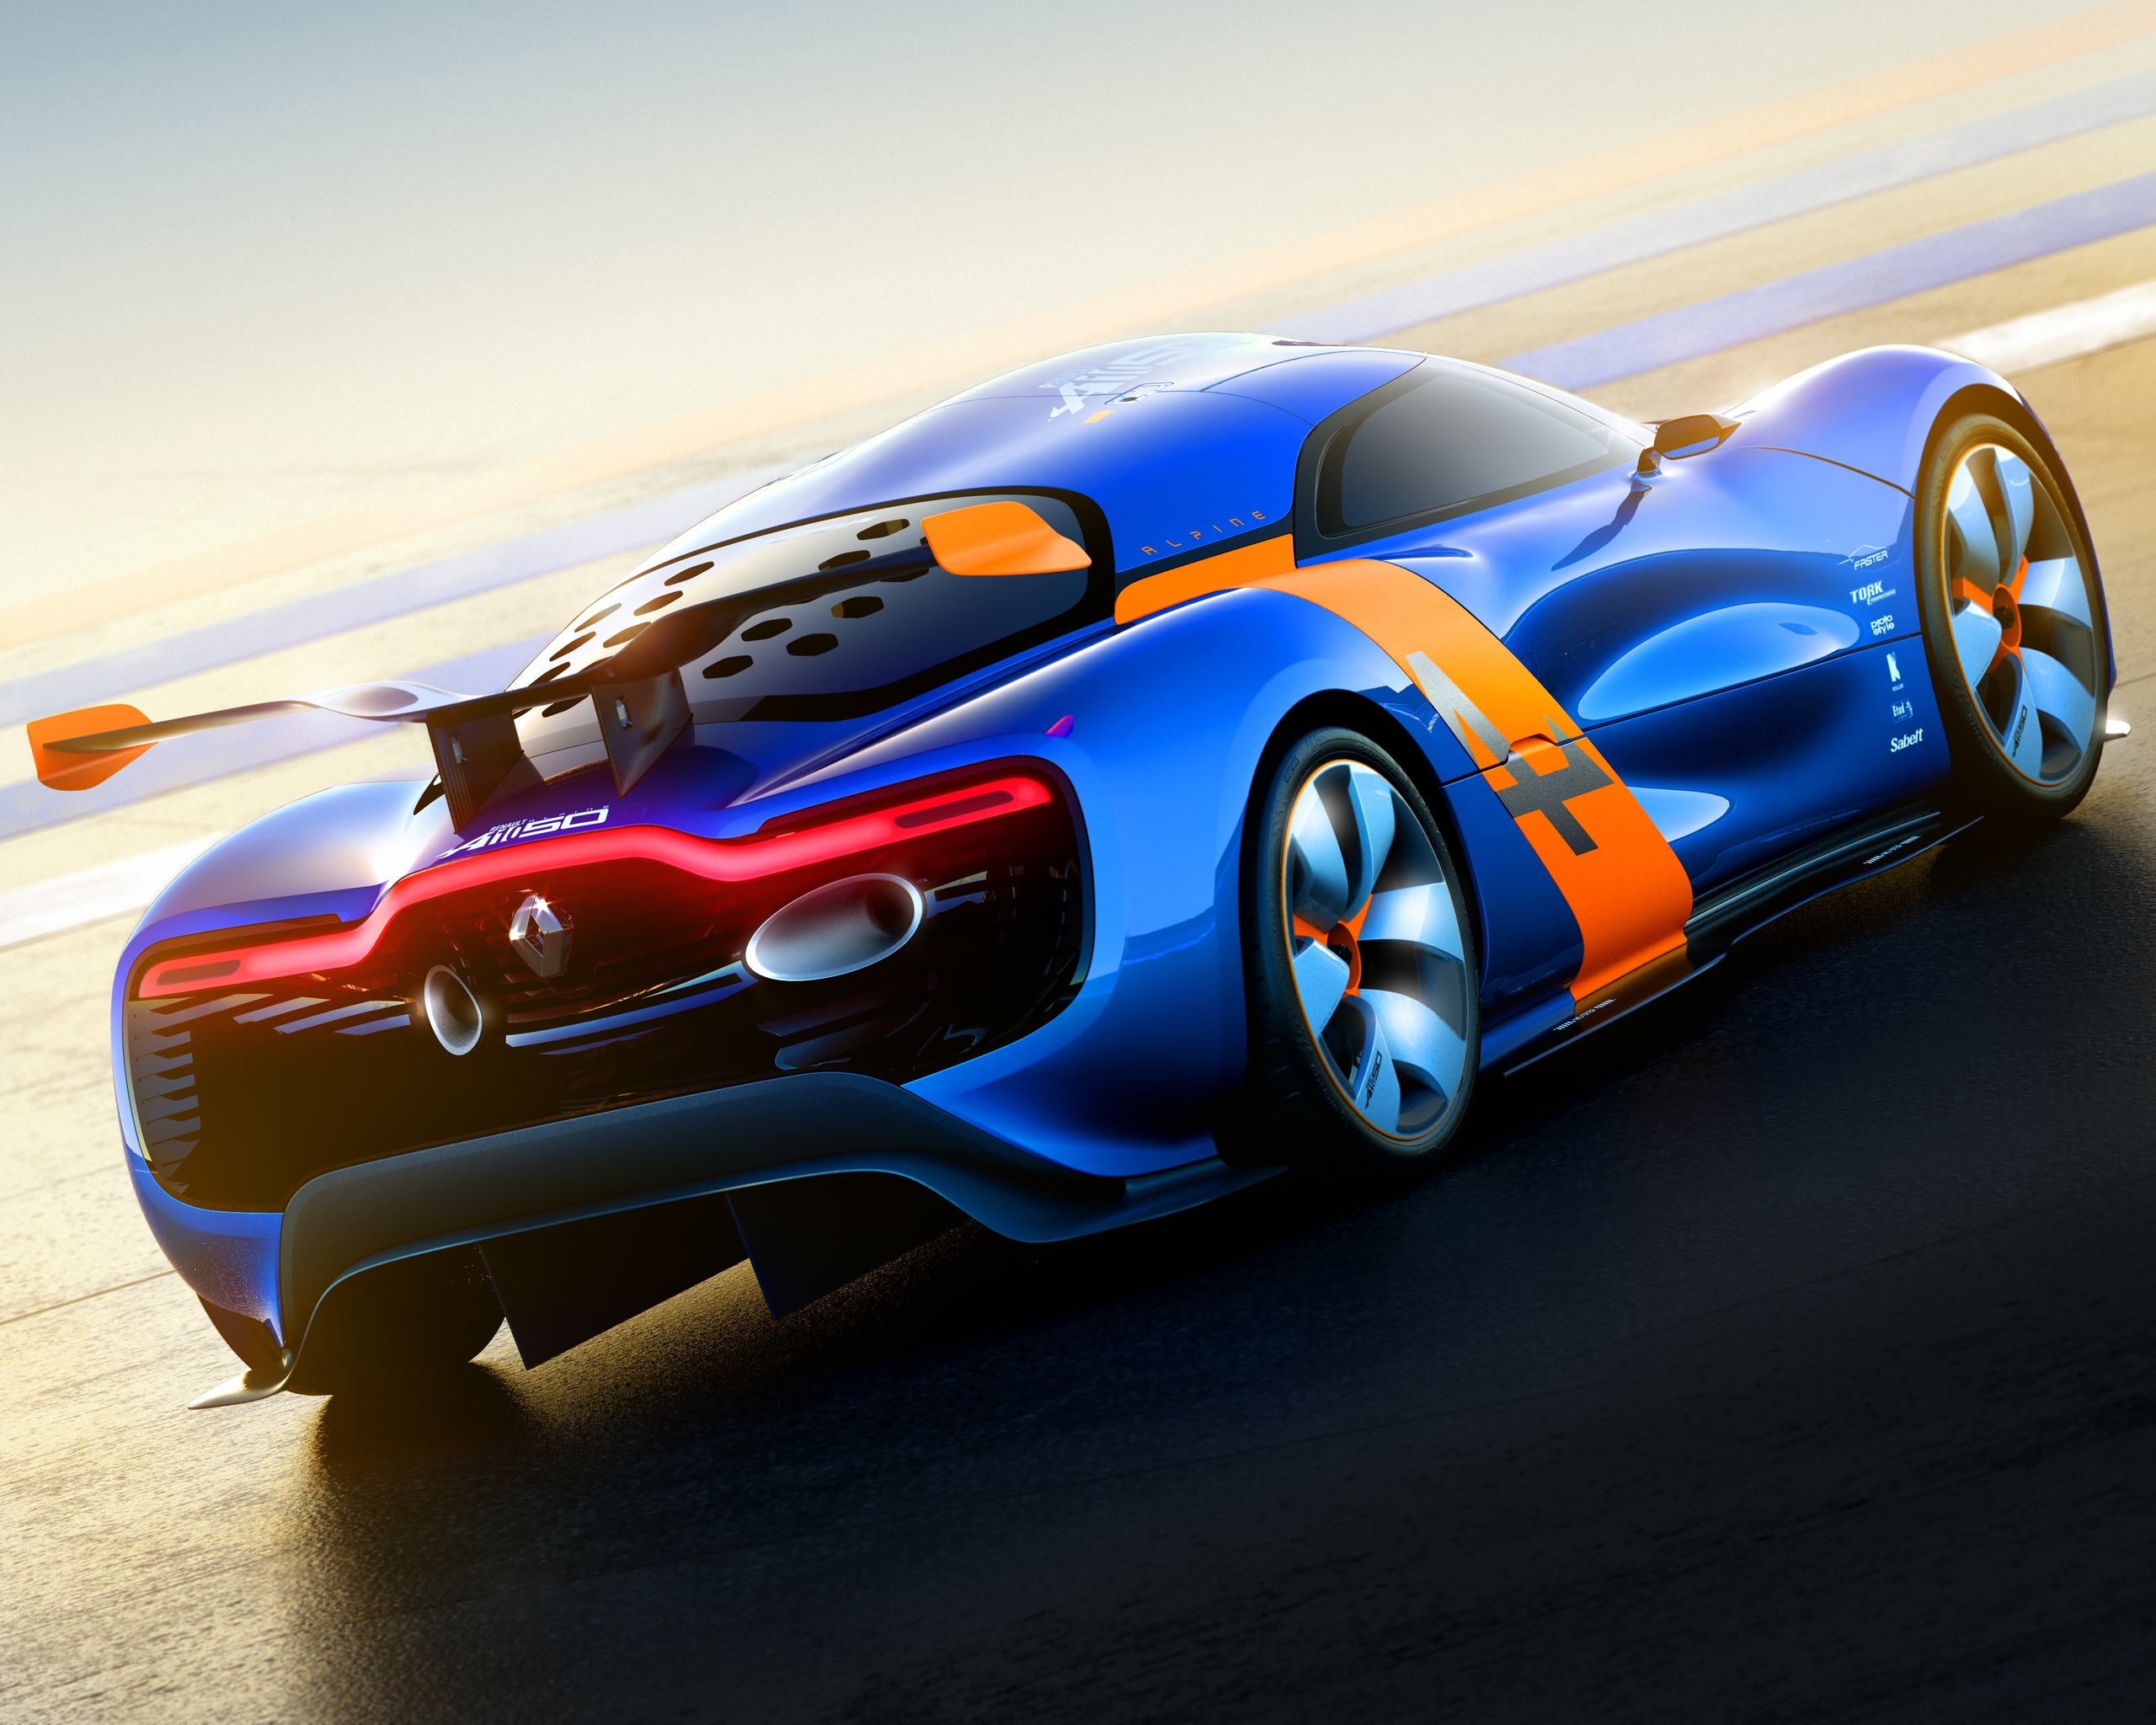 Image: Renault, Alpine, A110-50, Renault Alpine, blue, sports, coupe, sports car